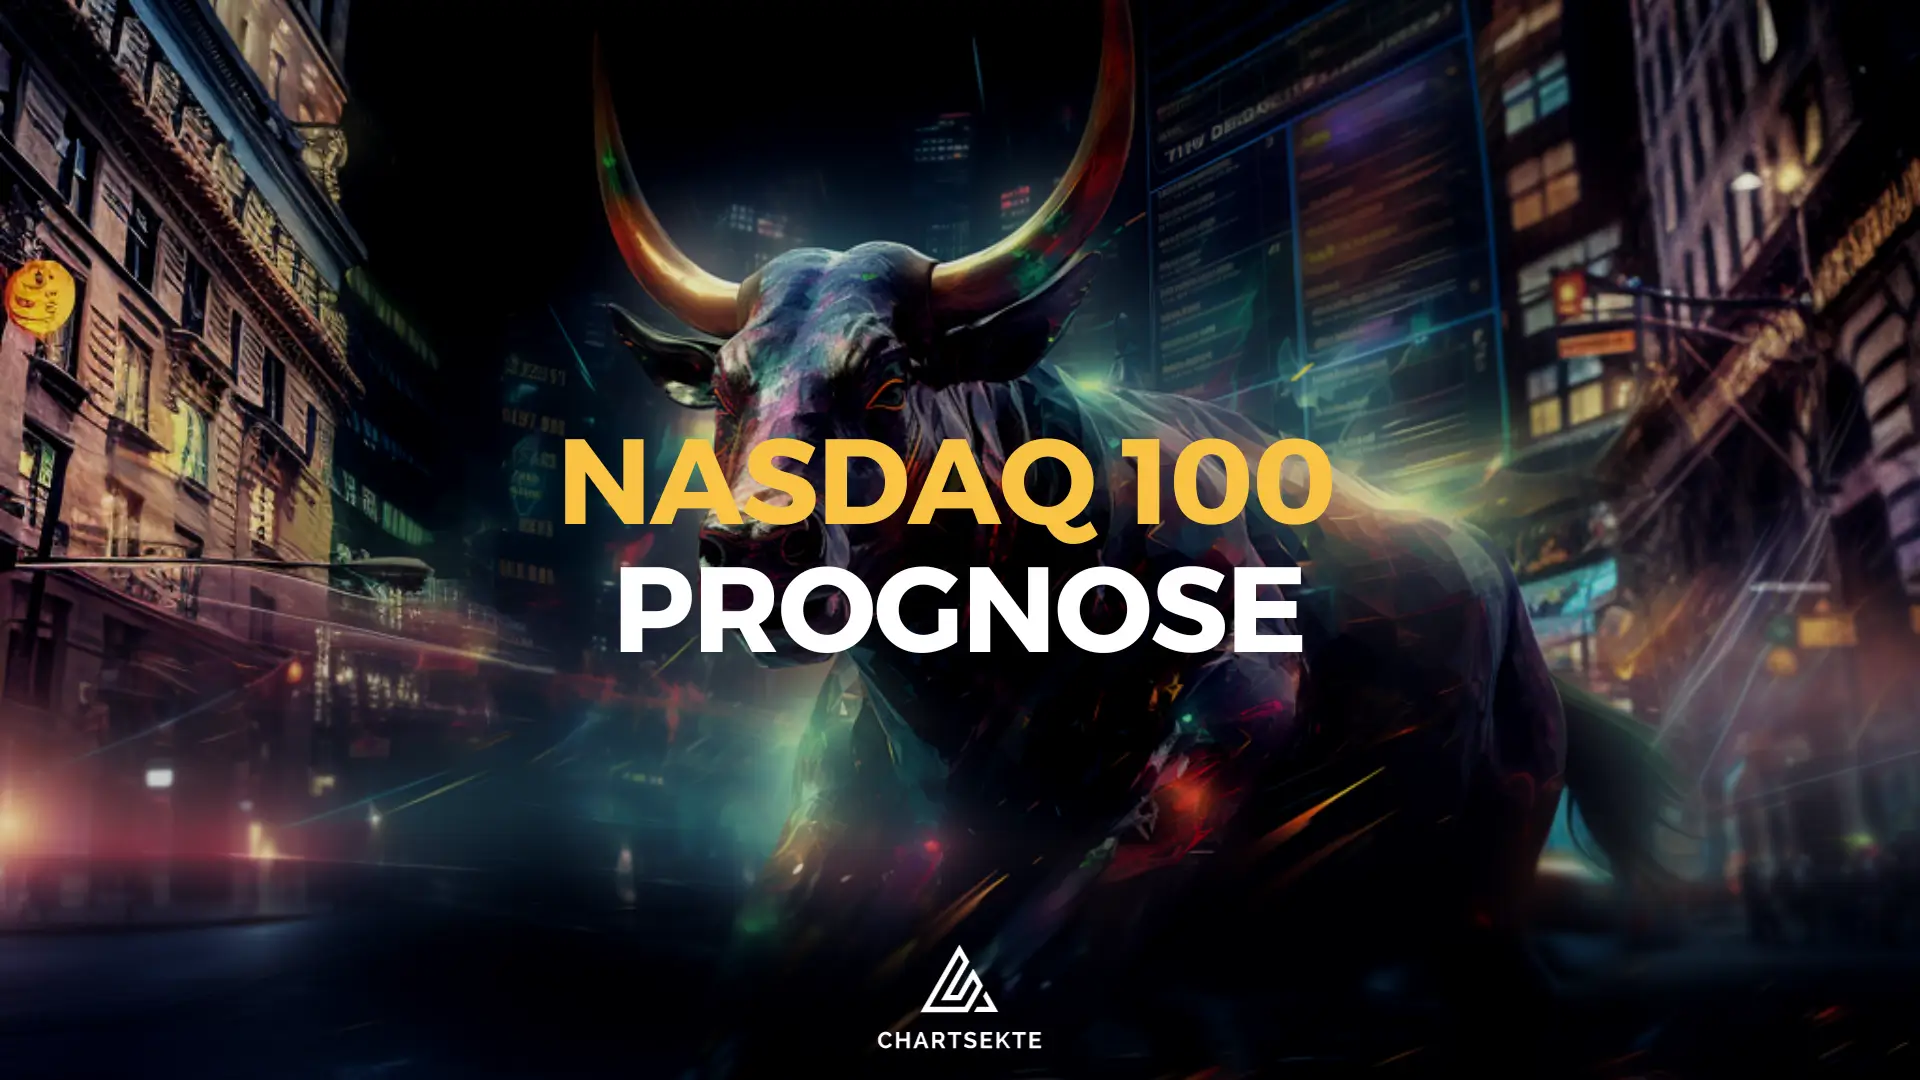 Nasdaq 100 Prognose